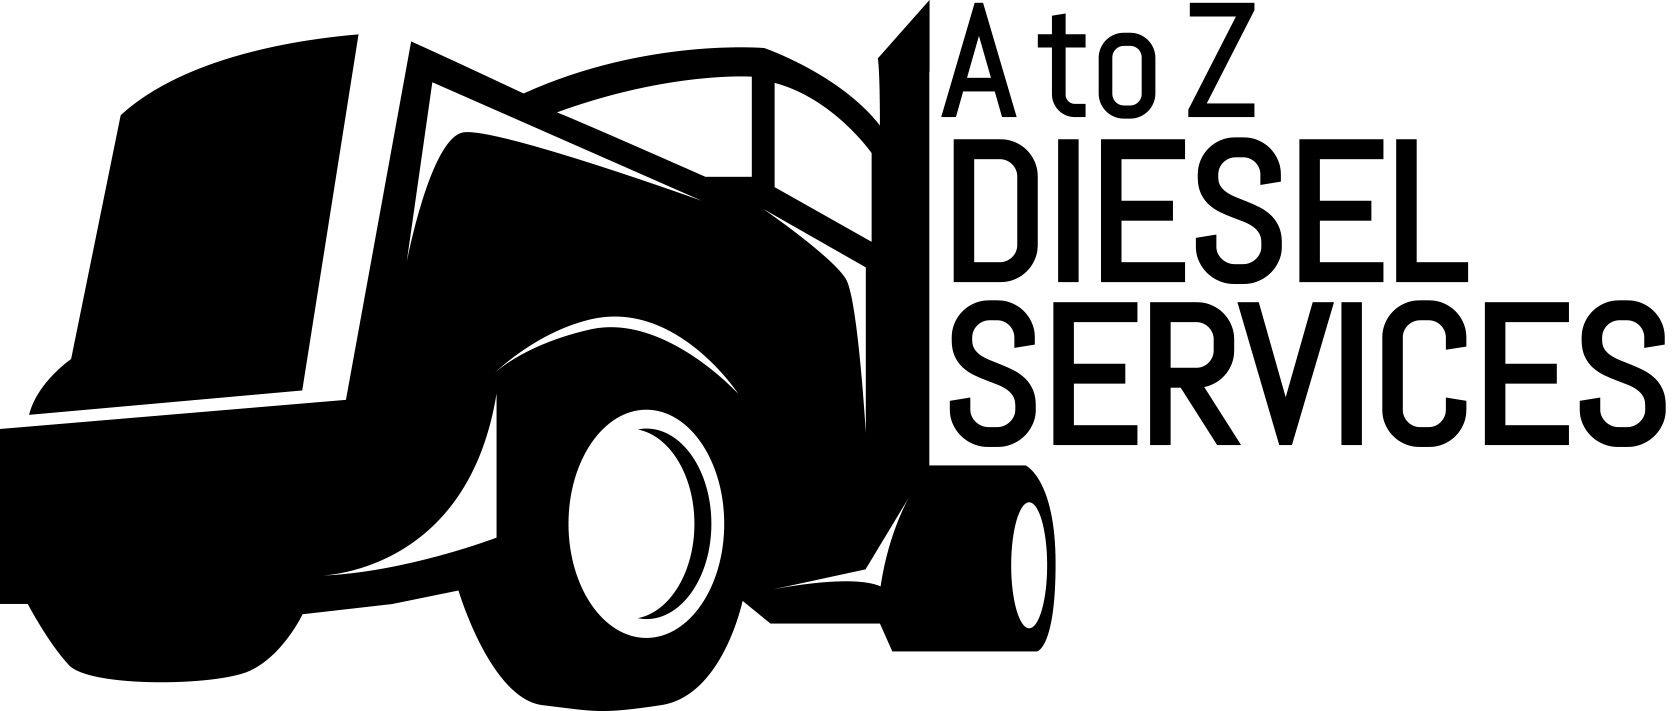 Diesel Mechanic Logo - Heavy Duty Mechanics, Apprentice, Journeyman, and Red Seal